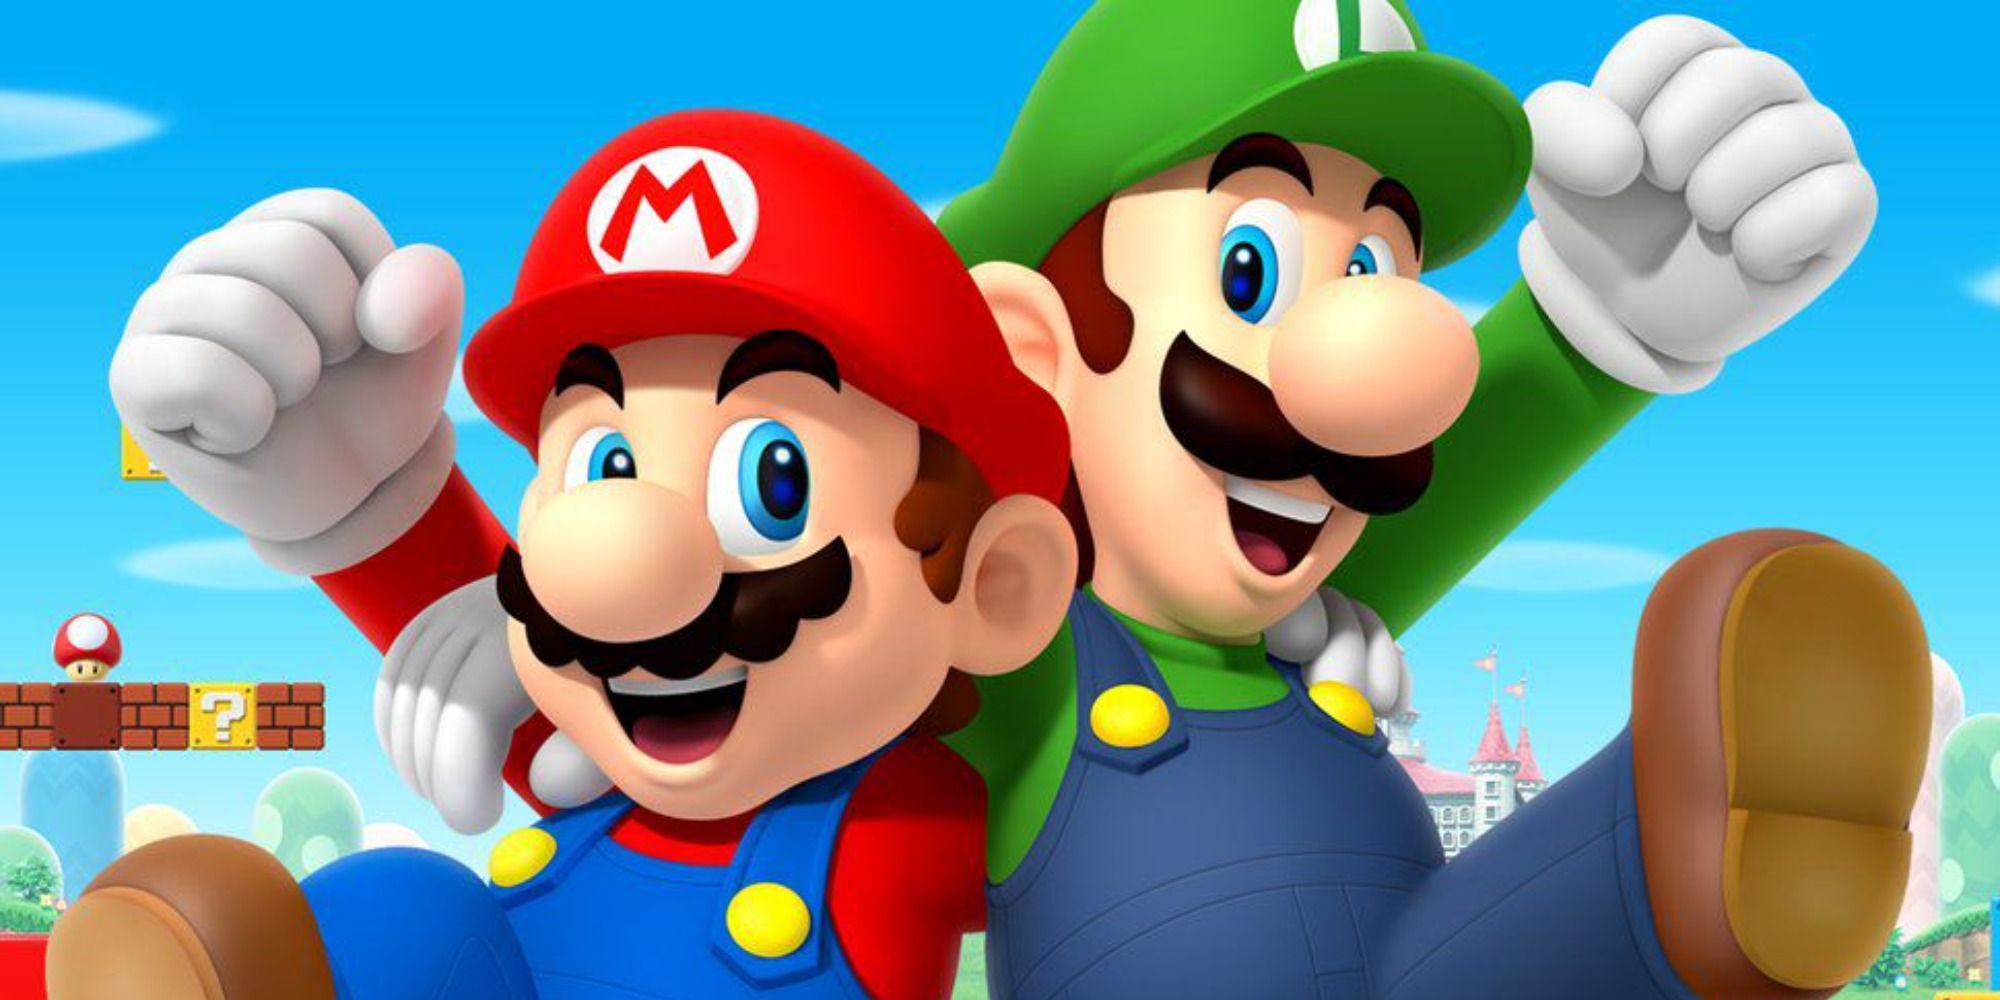 Mario & Luigi holding each other in a 